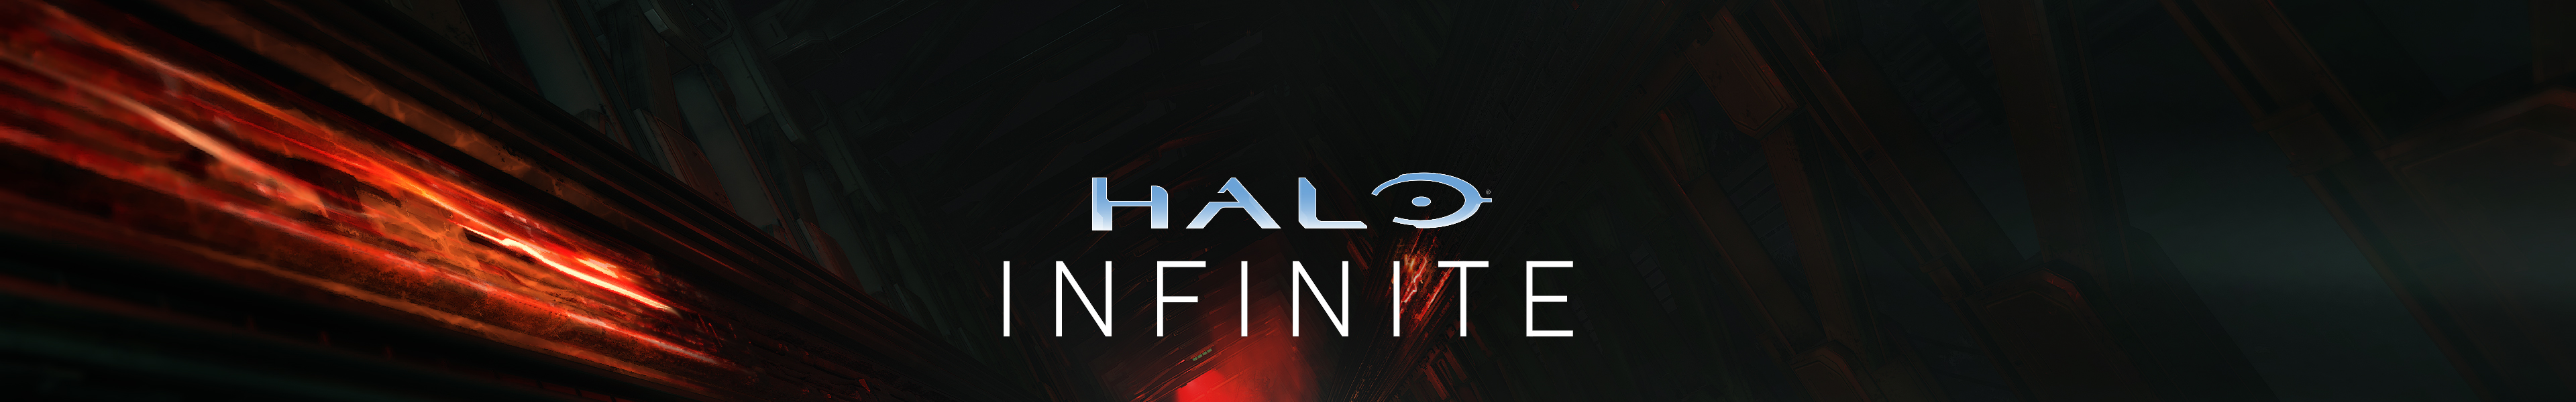 Halo Infinite title card.